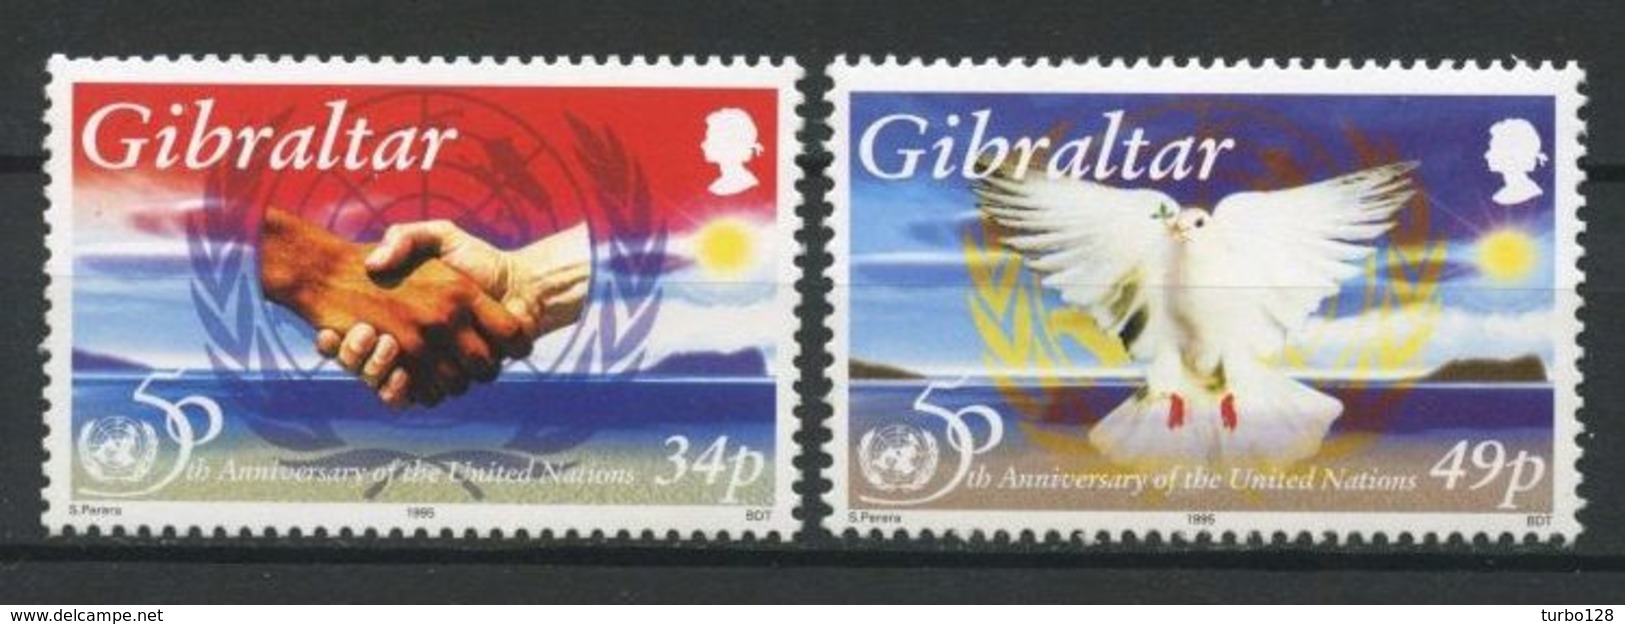 GIBRALTAR 1995 N° 744/745 ** Neufs MNH Superbes C 4 € Faune Oiseaux Colombe ONU Nations Unies Mains Emblème - Gibraltar